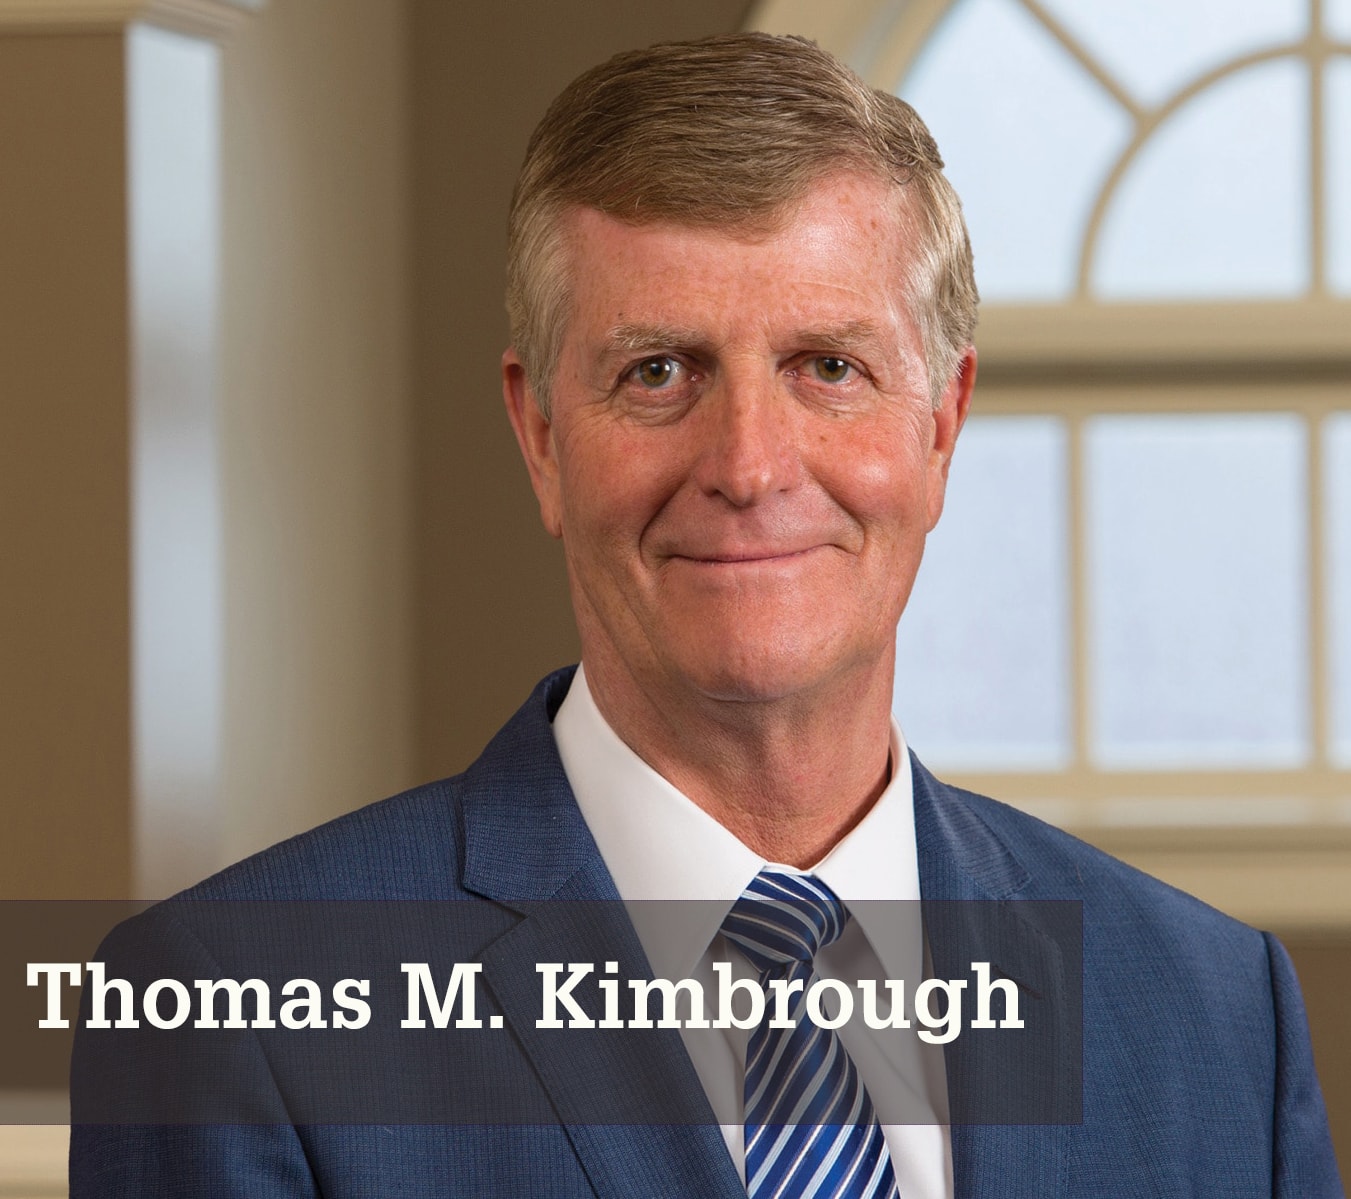 Thomas M. Kimbrough